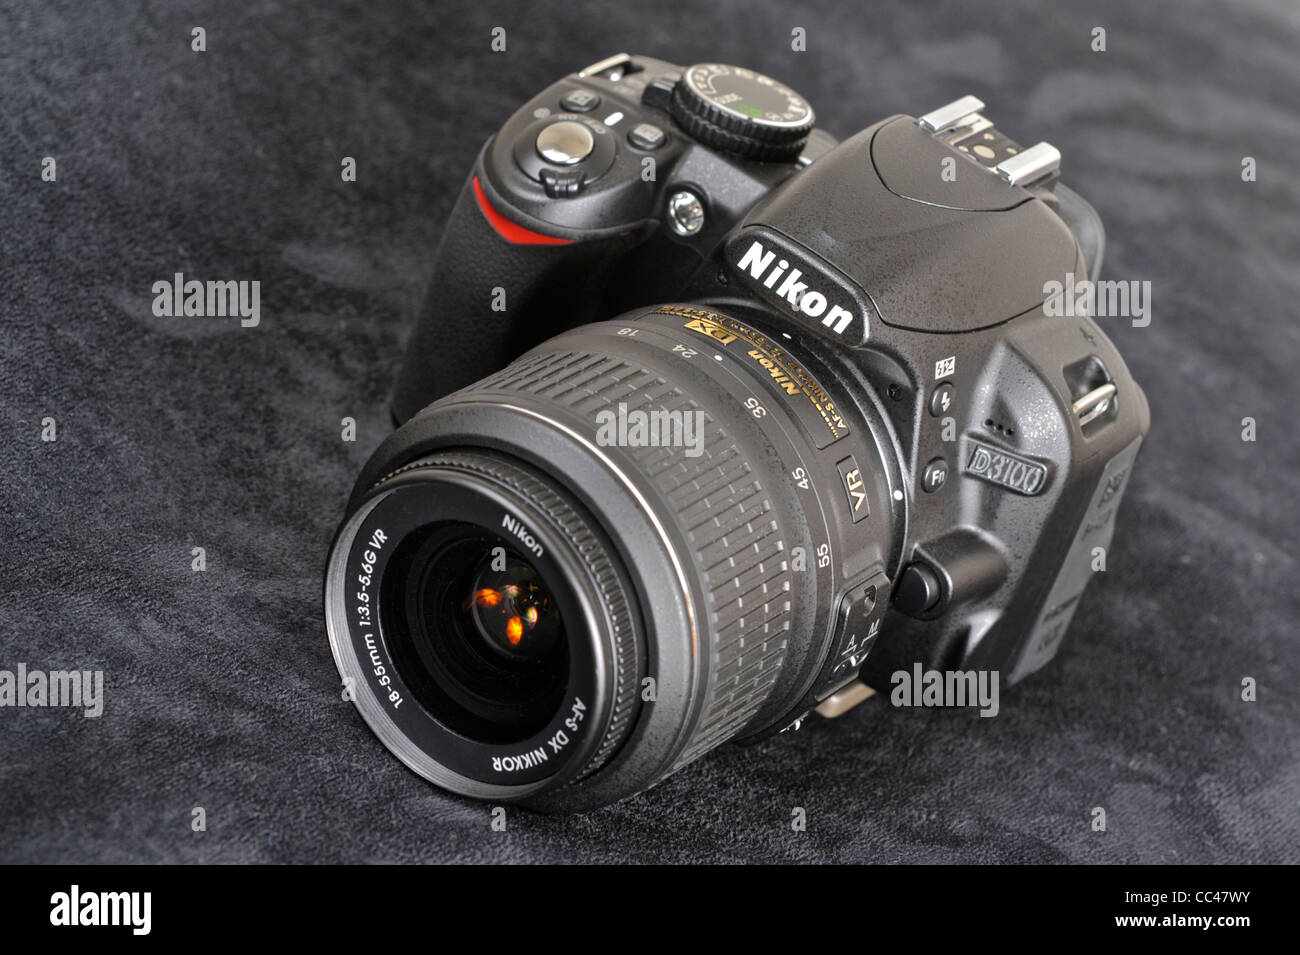 Nikon 18 55 fotografías e imágenes de alta resolución - Alamy